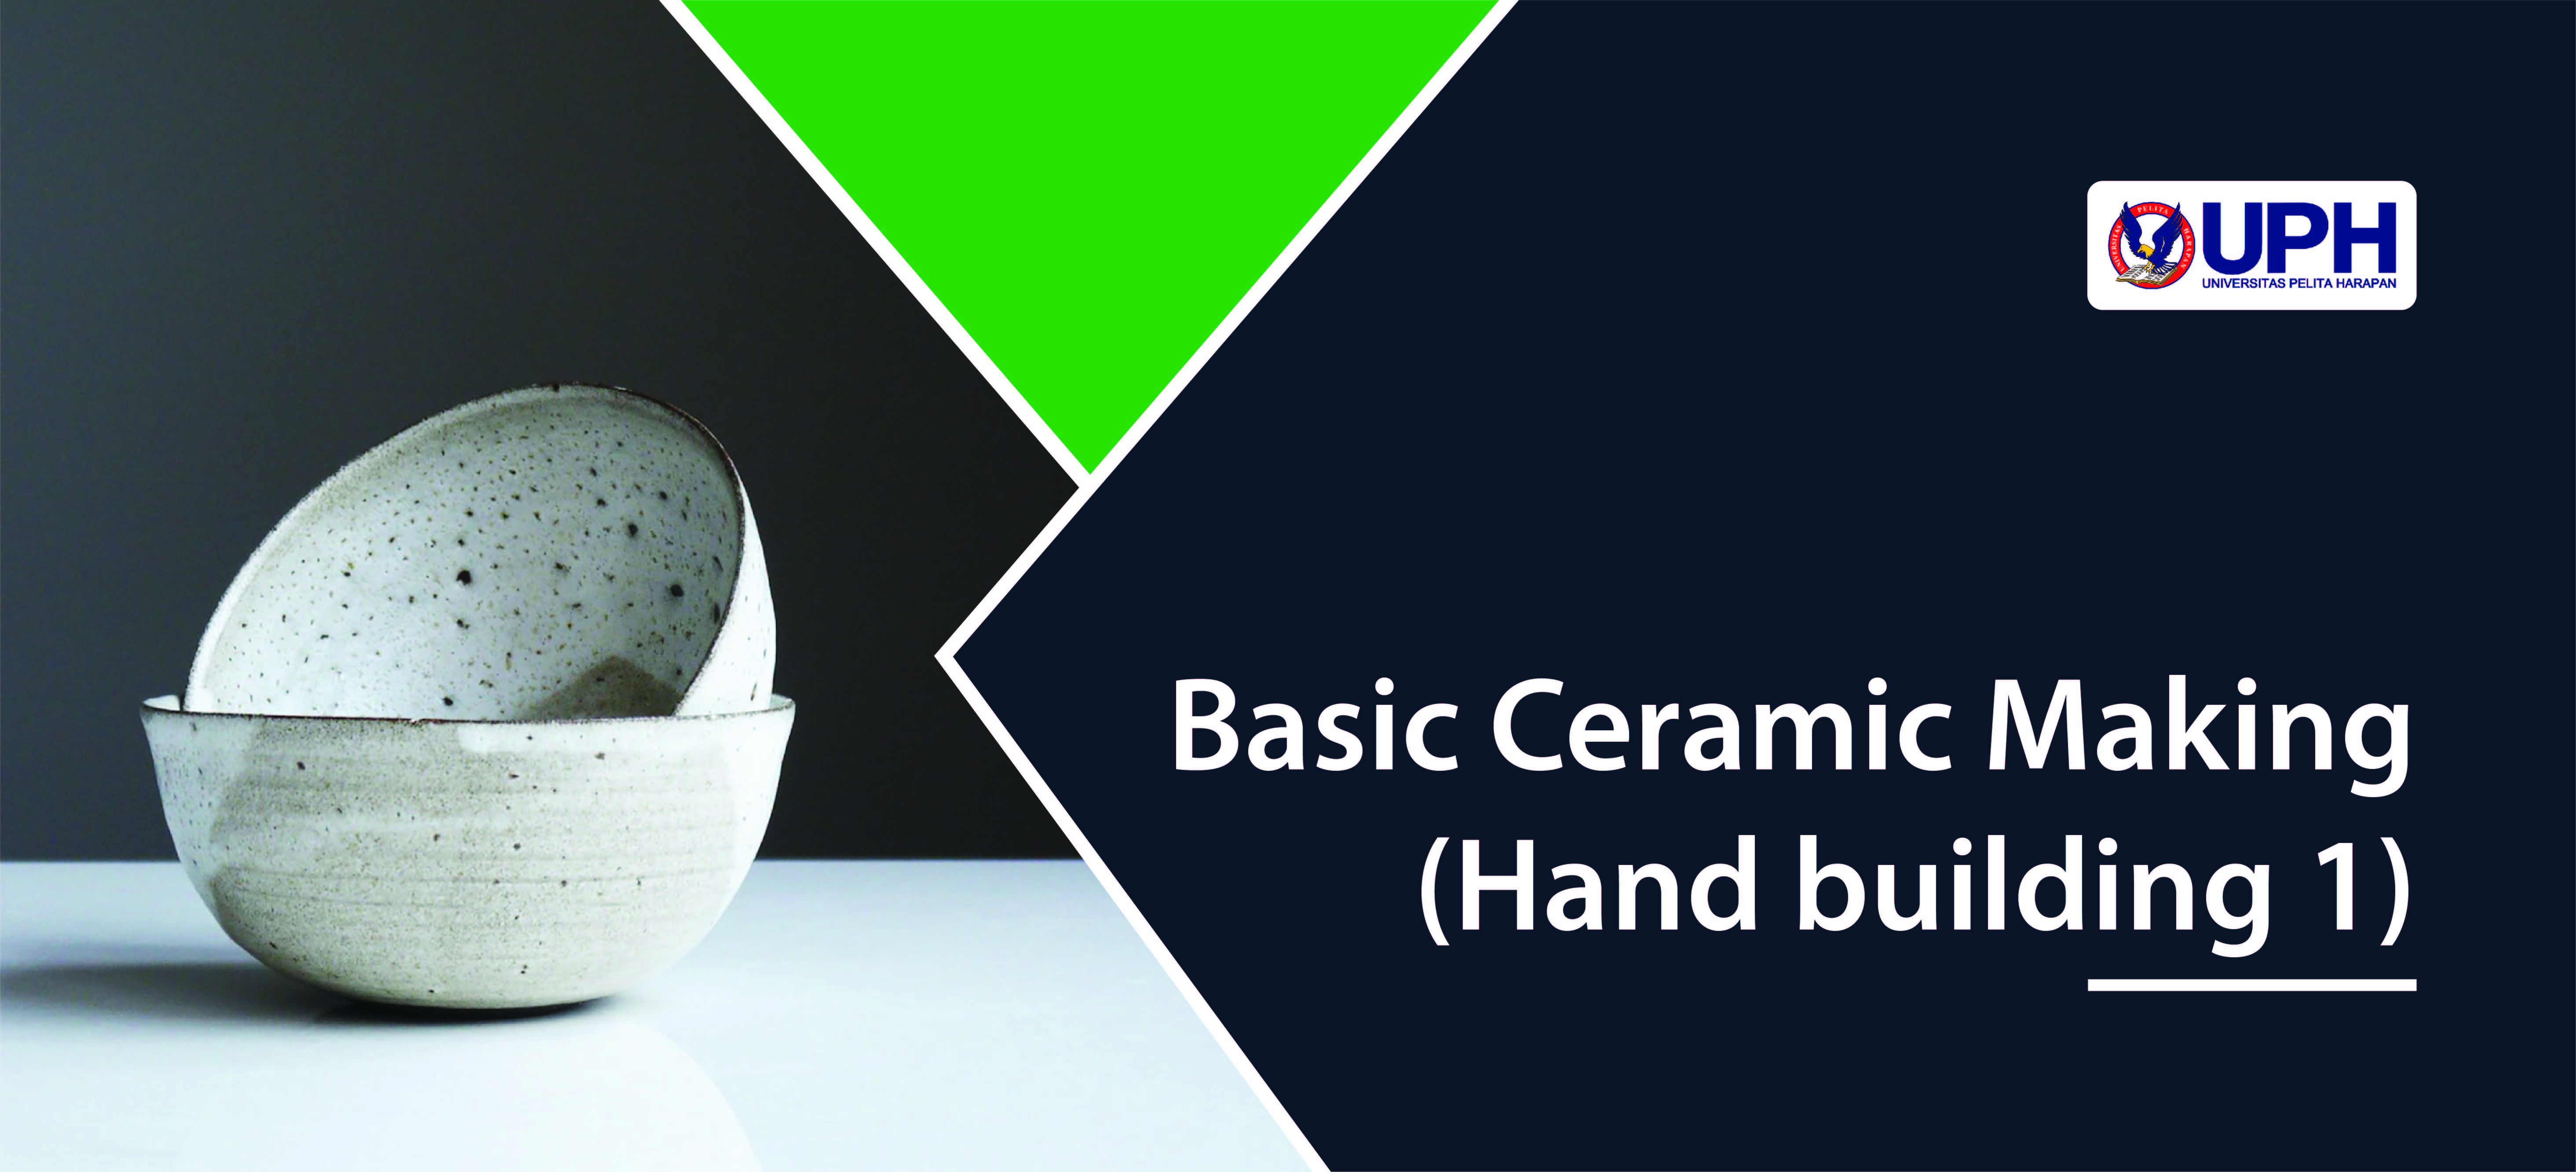 Basic Ceramic Making (Hand building 1) - PRO 202E03